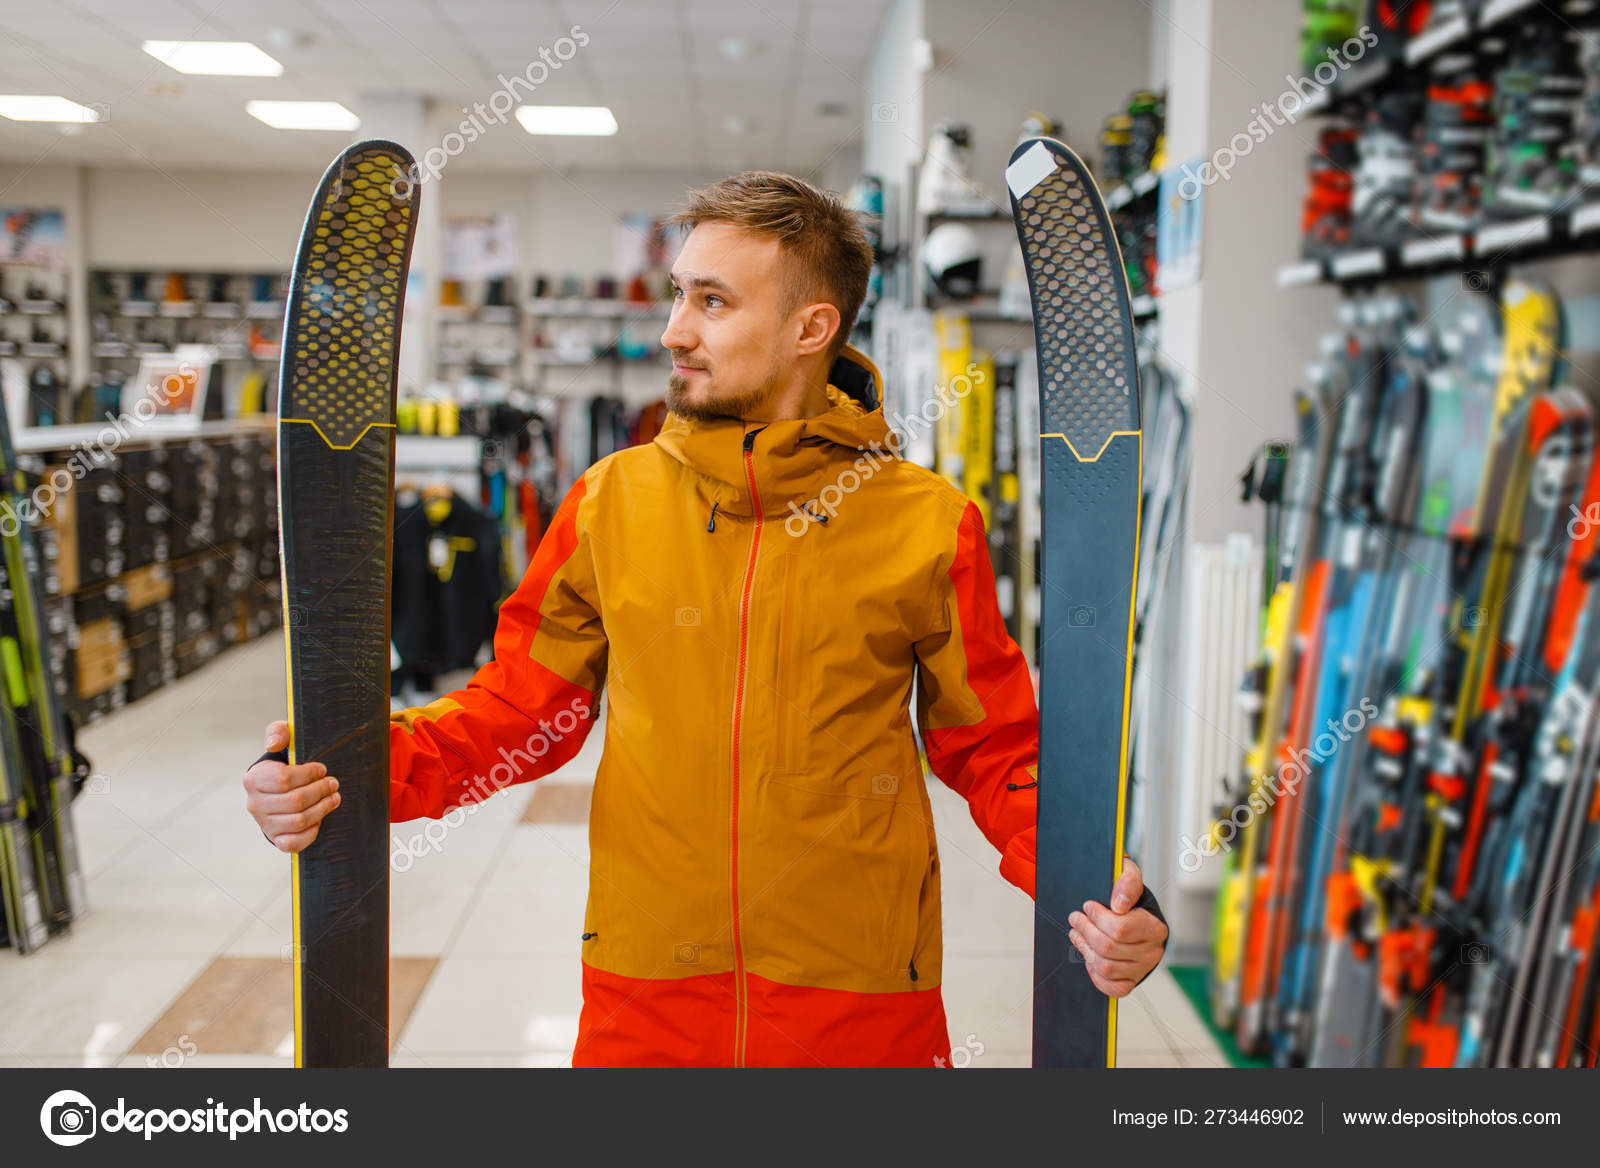 Ski - Sport and Lifestyle